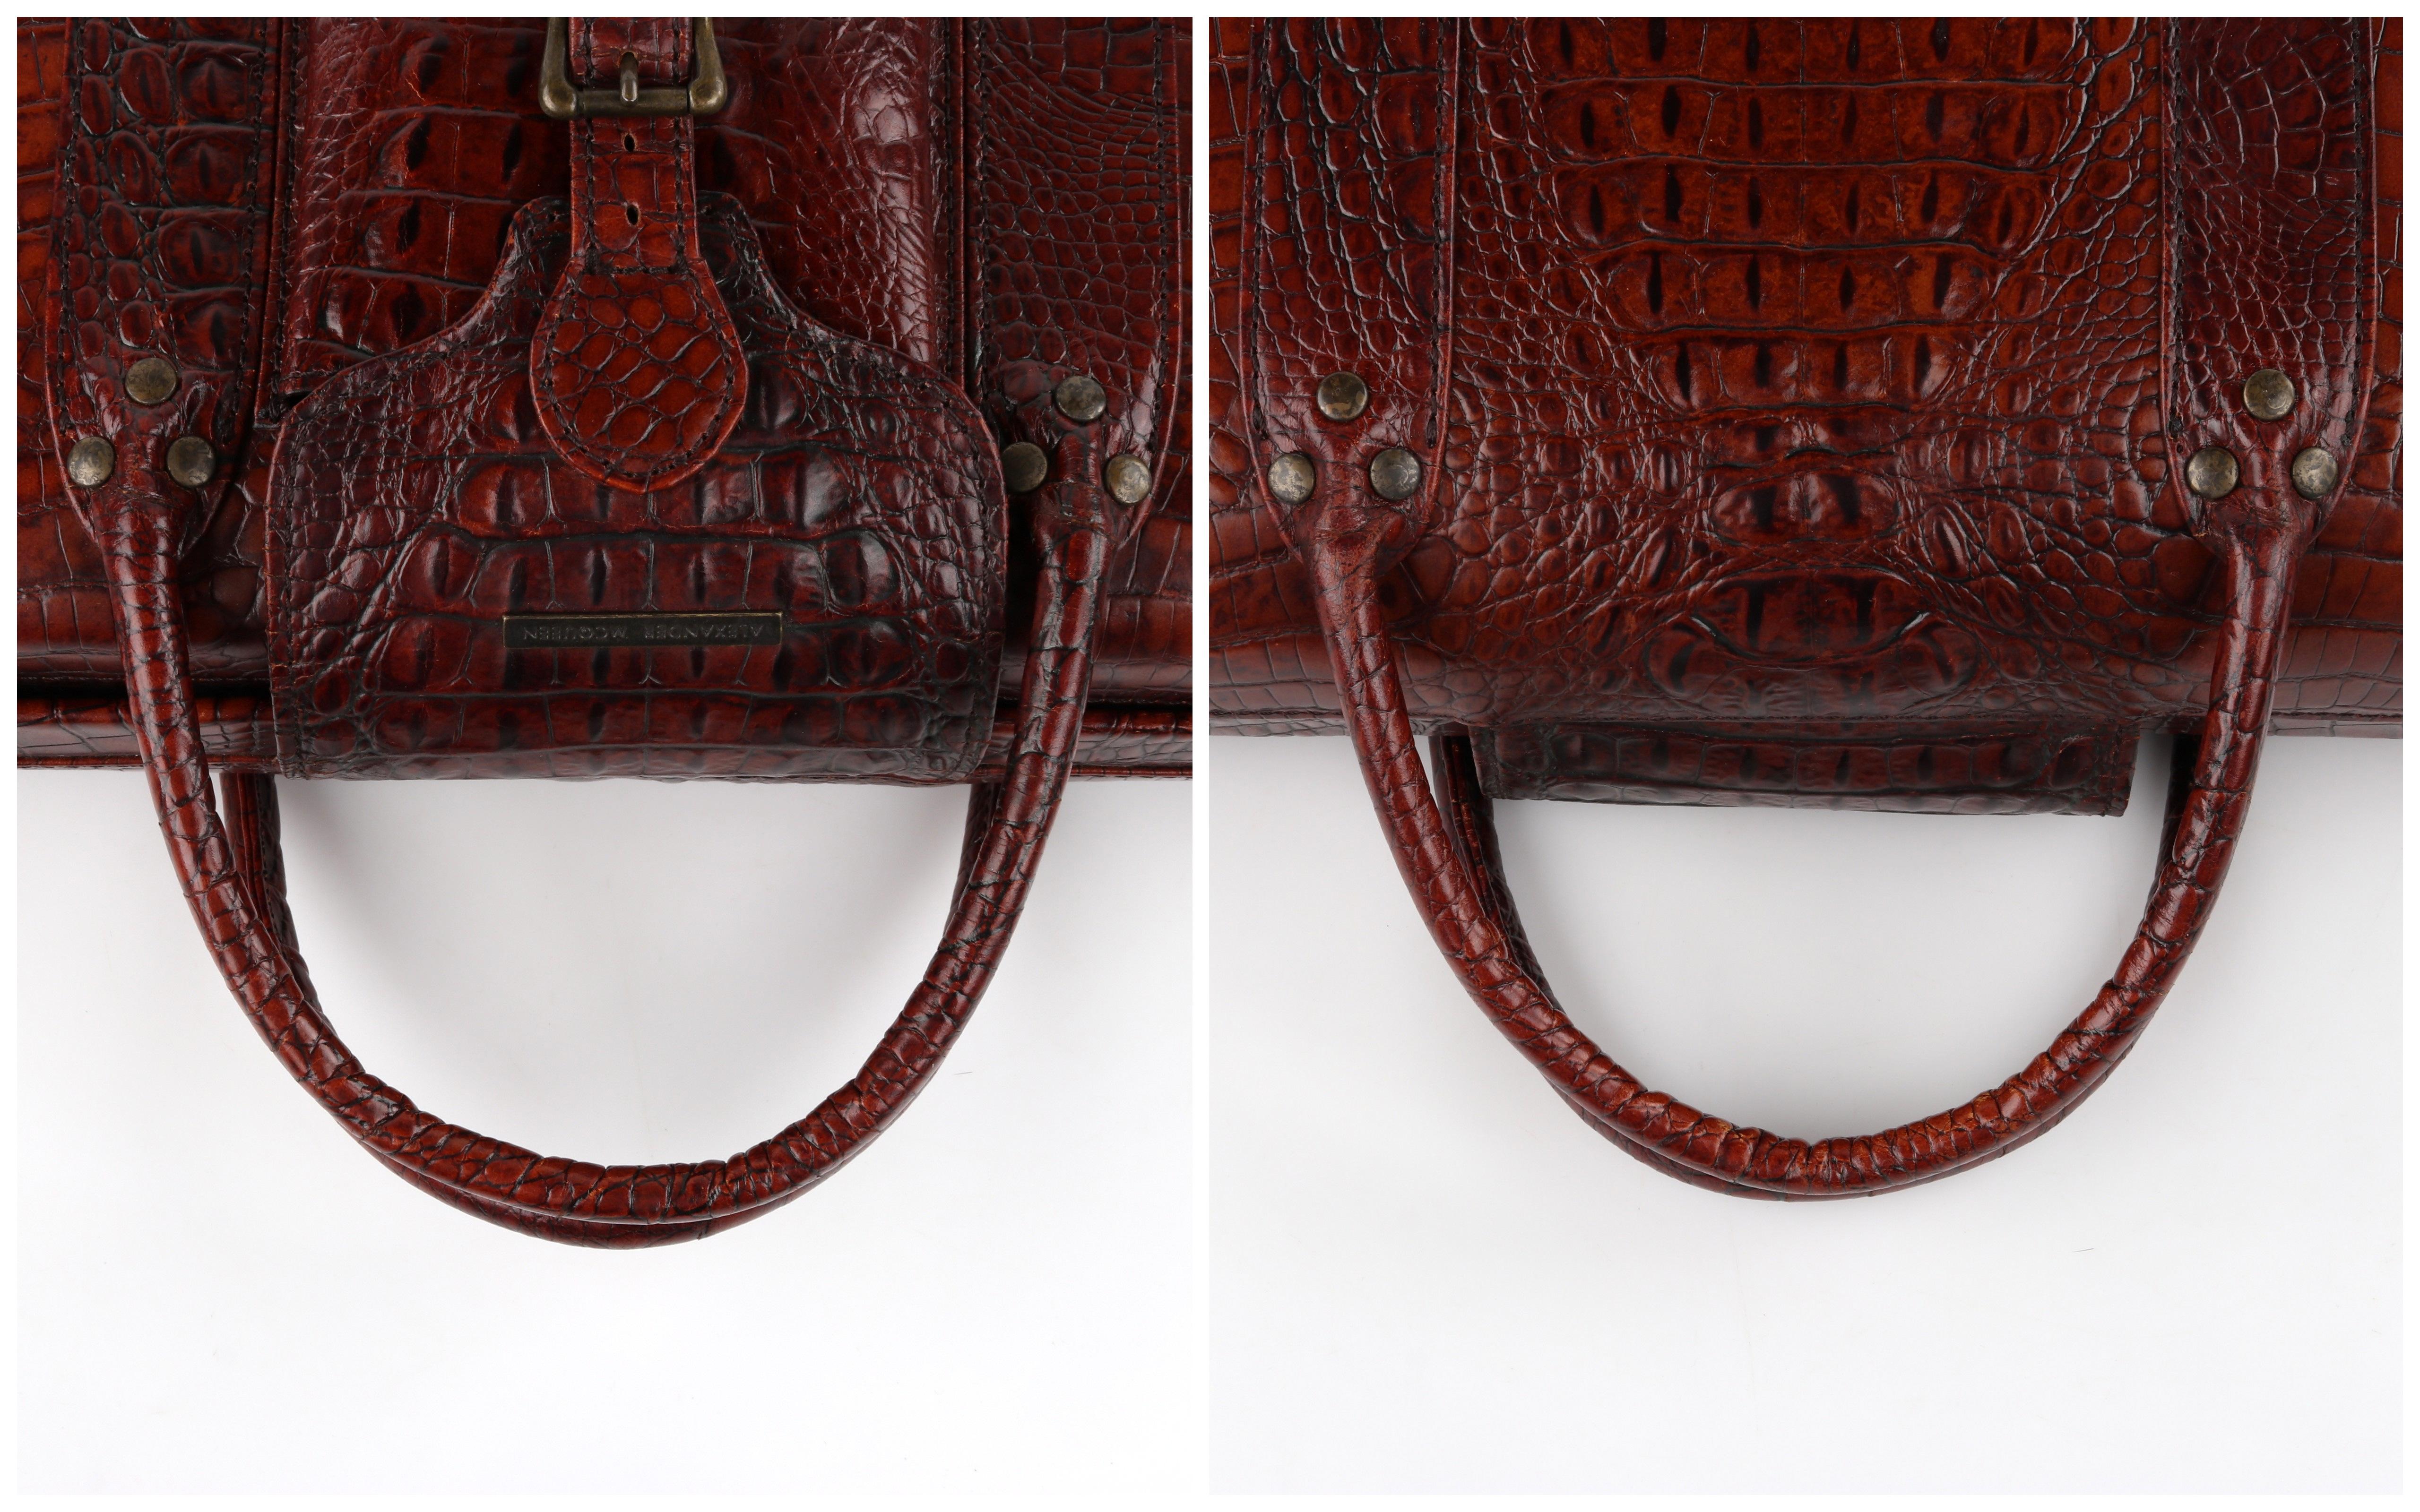 ALEXANDER McQUEEN c.2003 Brown Leather Crocodile Embossed Buckle Box Handbag For Sale 5